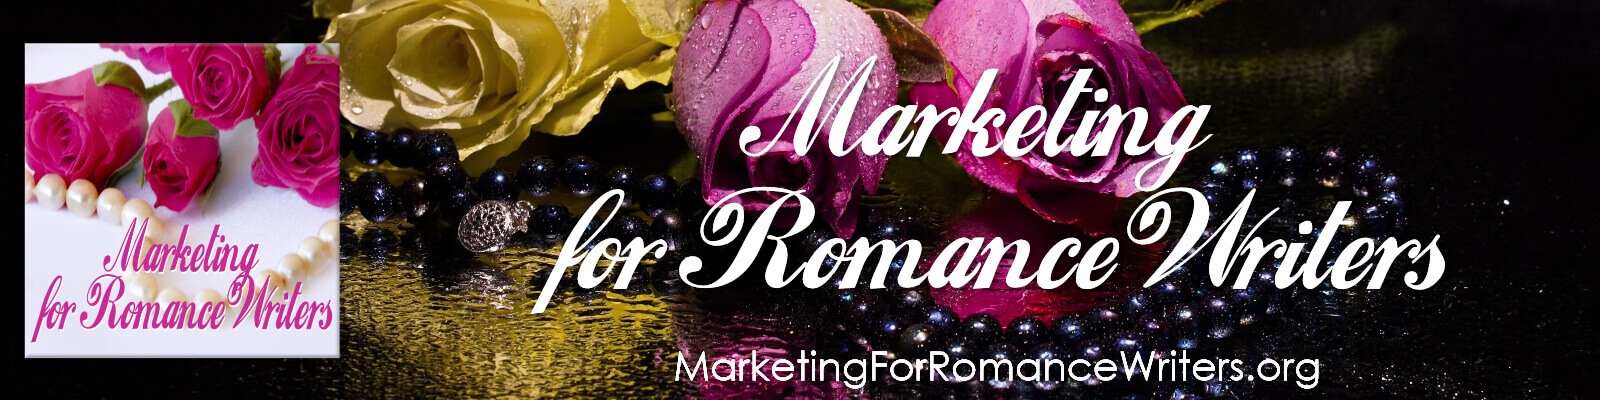 Marketing for Romance Writers